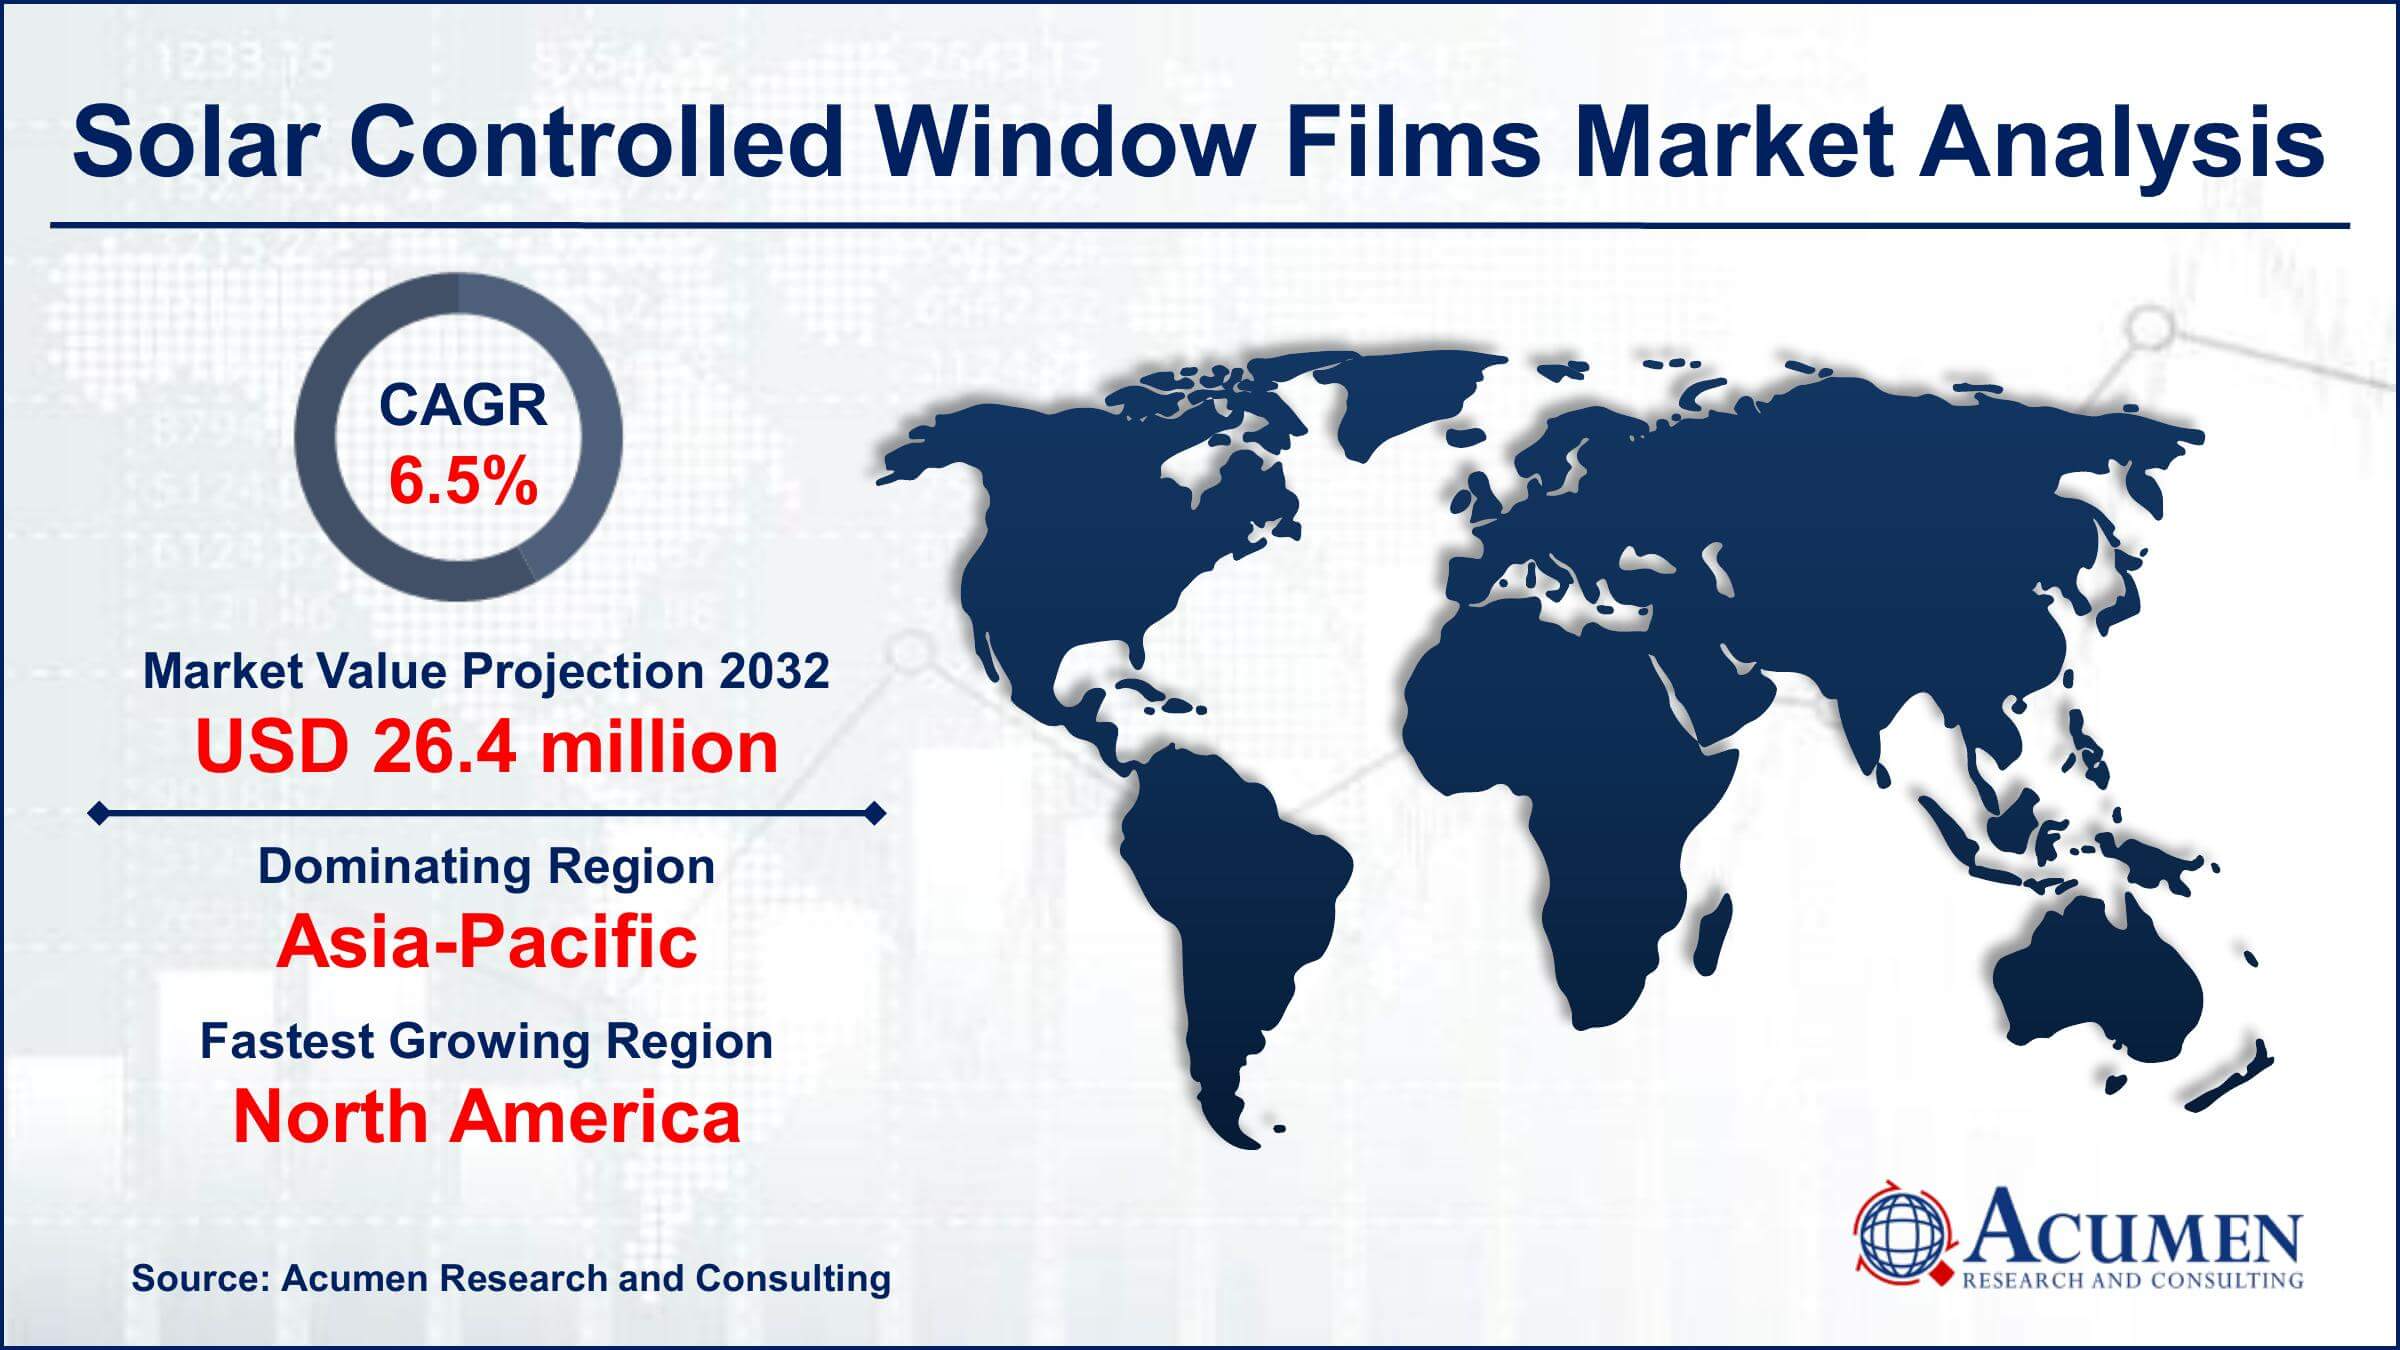 Global Solar Controlled Window Films Market Trends